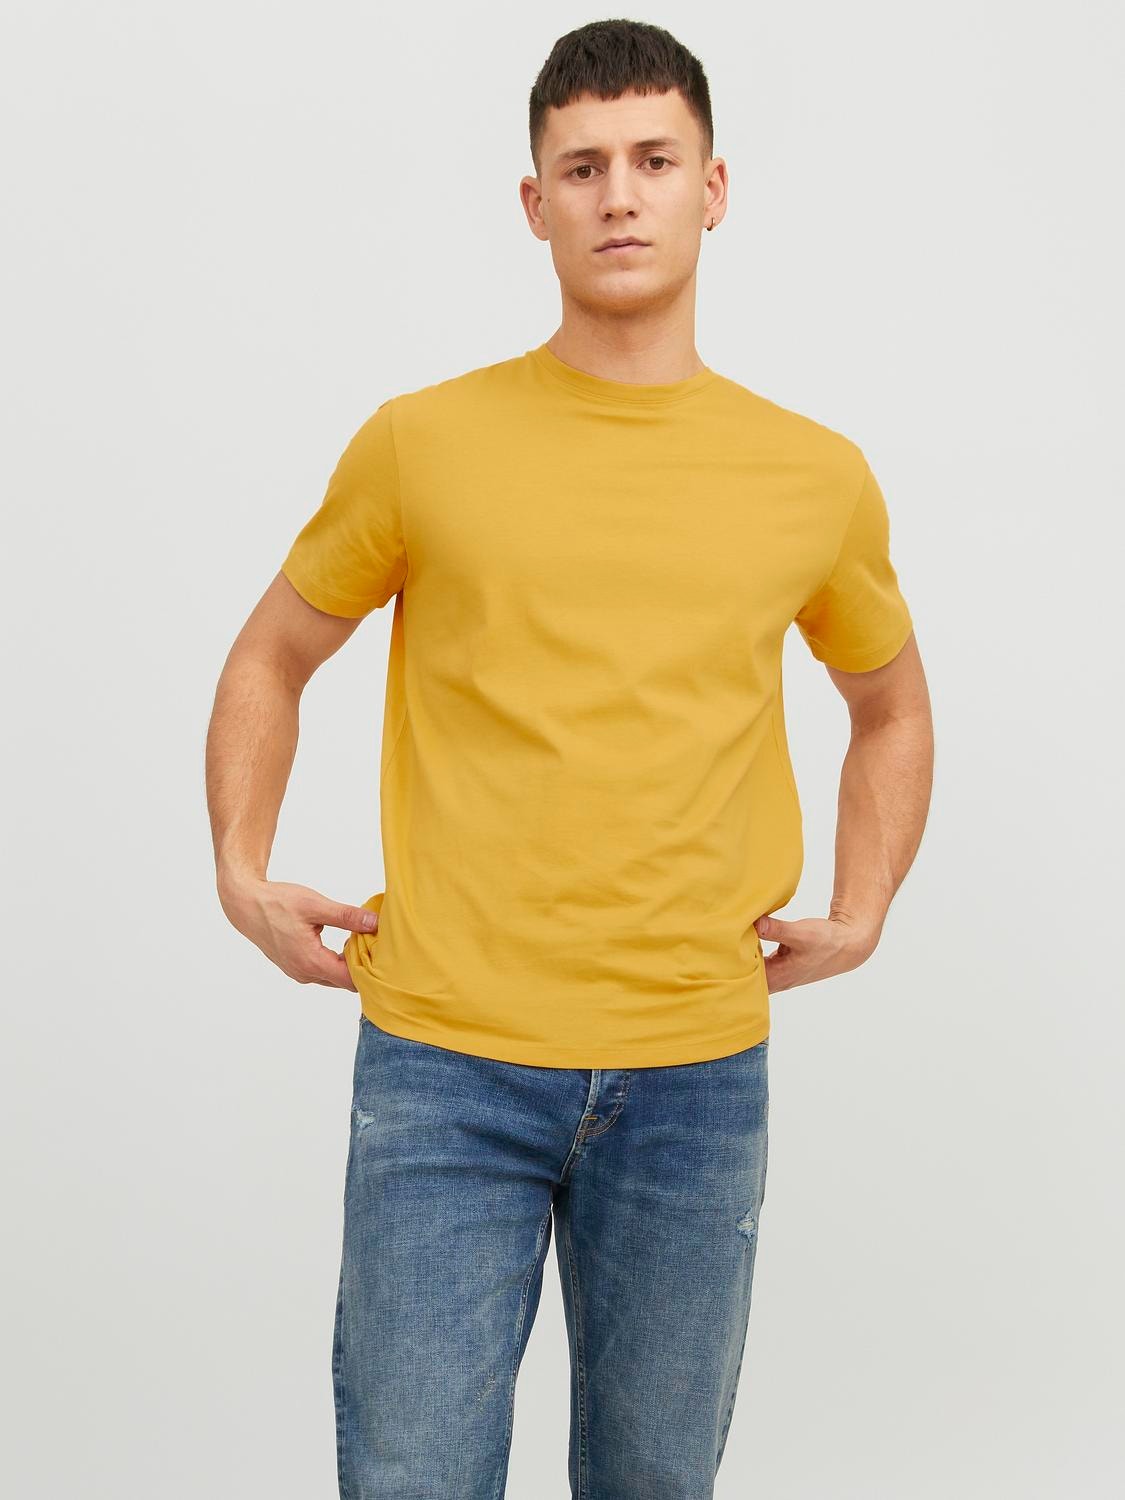 Men's Yellow Crew Neck T-Shirt - True Classic